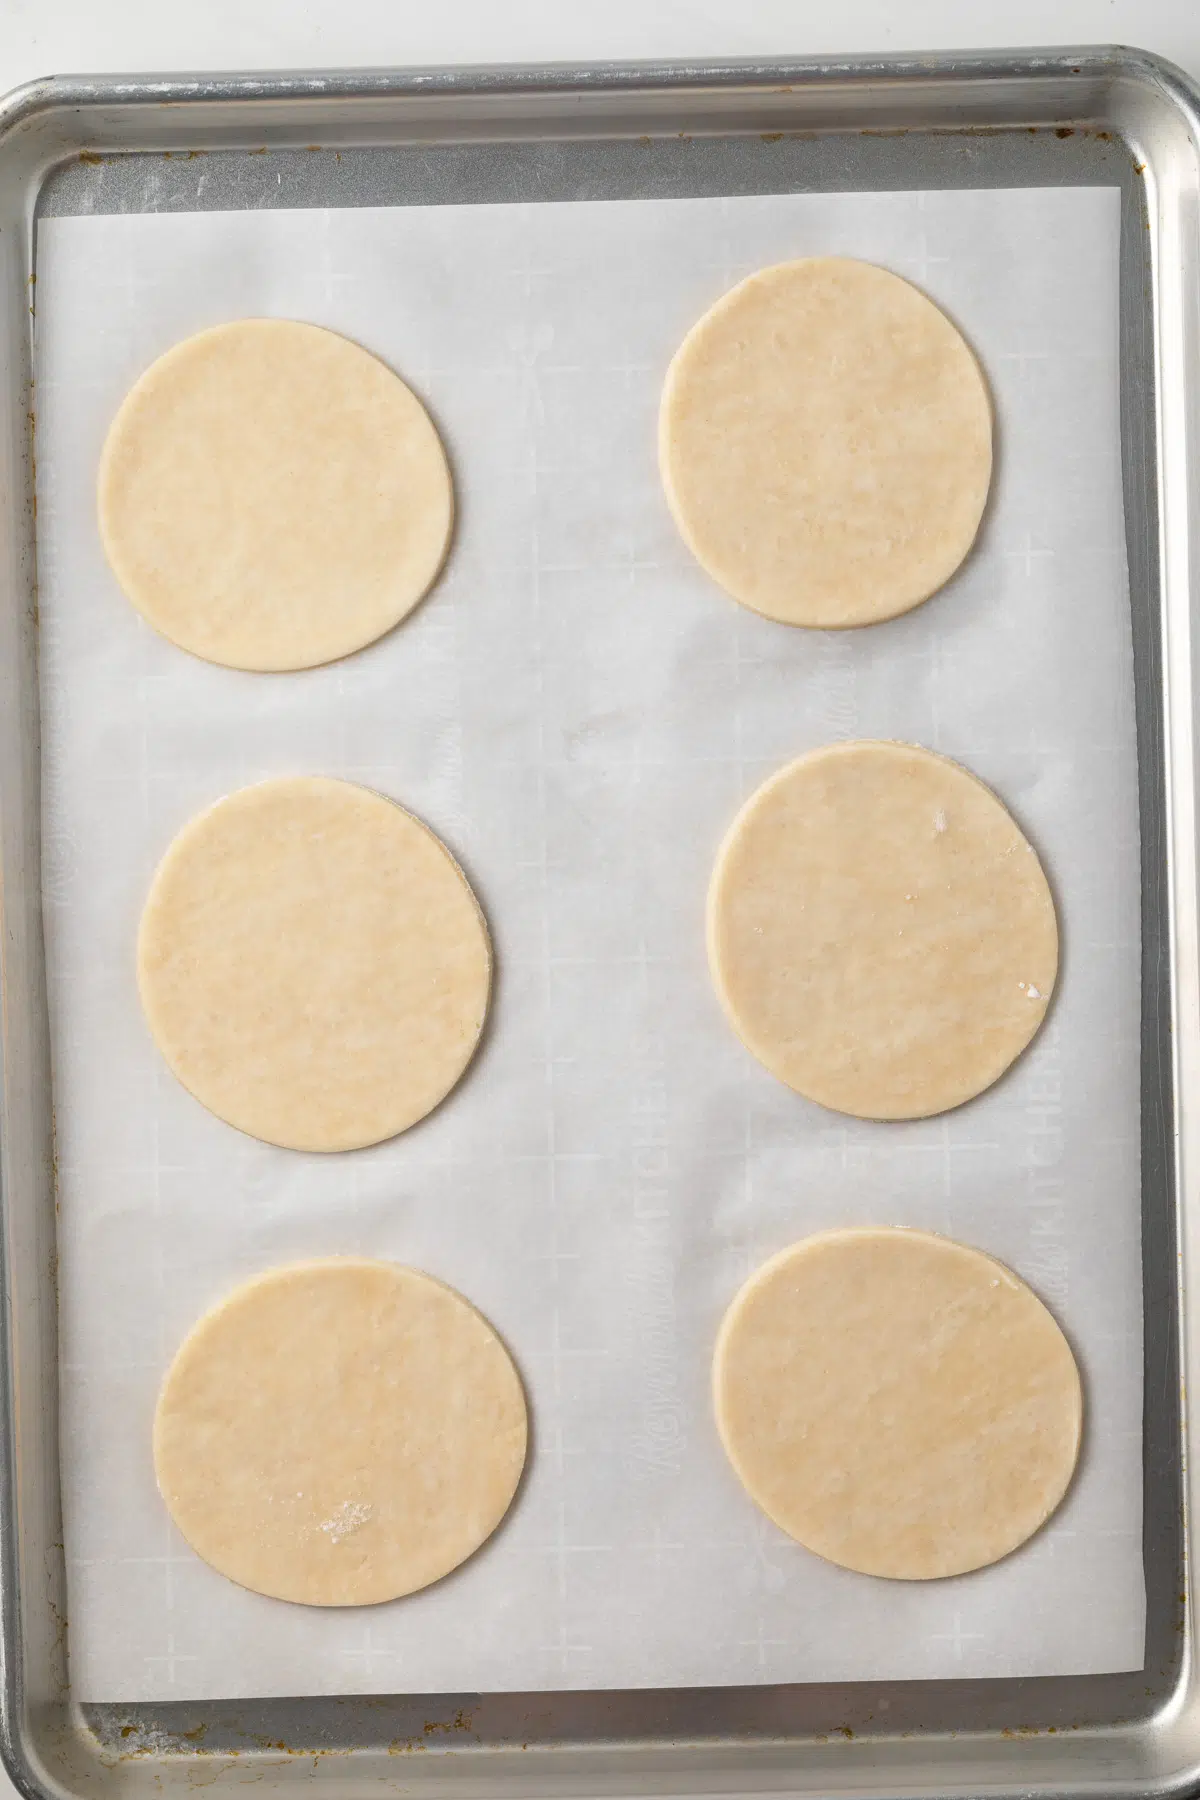 Six mini pie dough circles on a baking sheet.